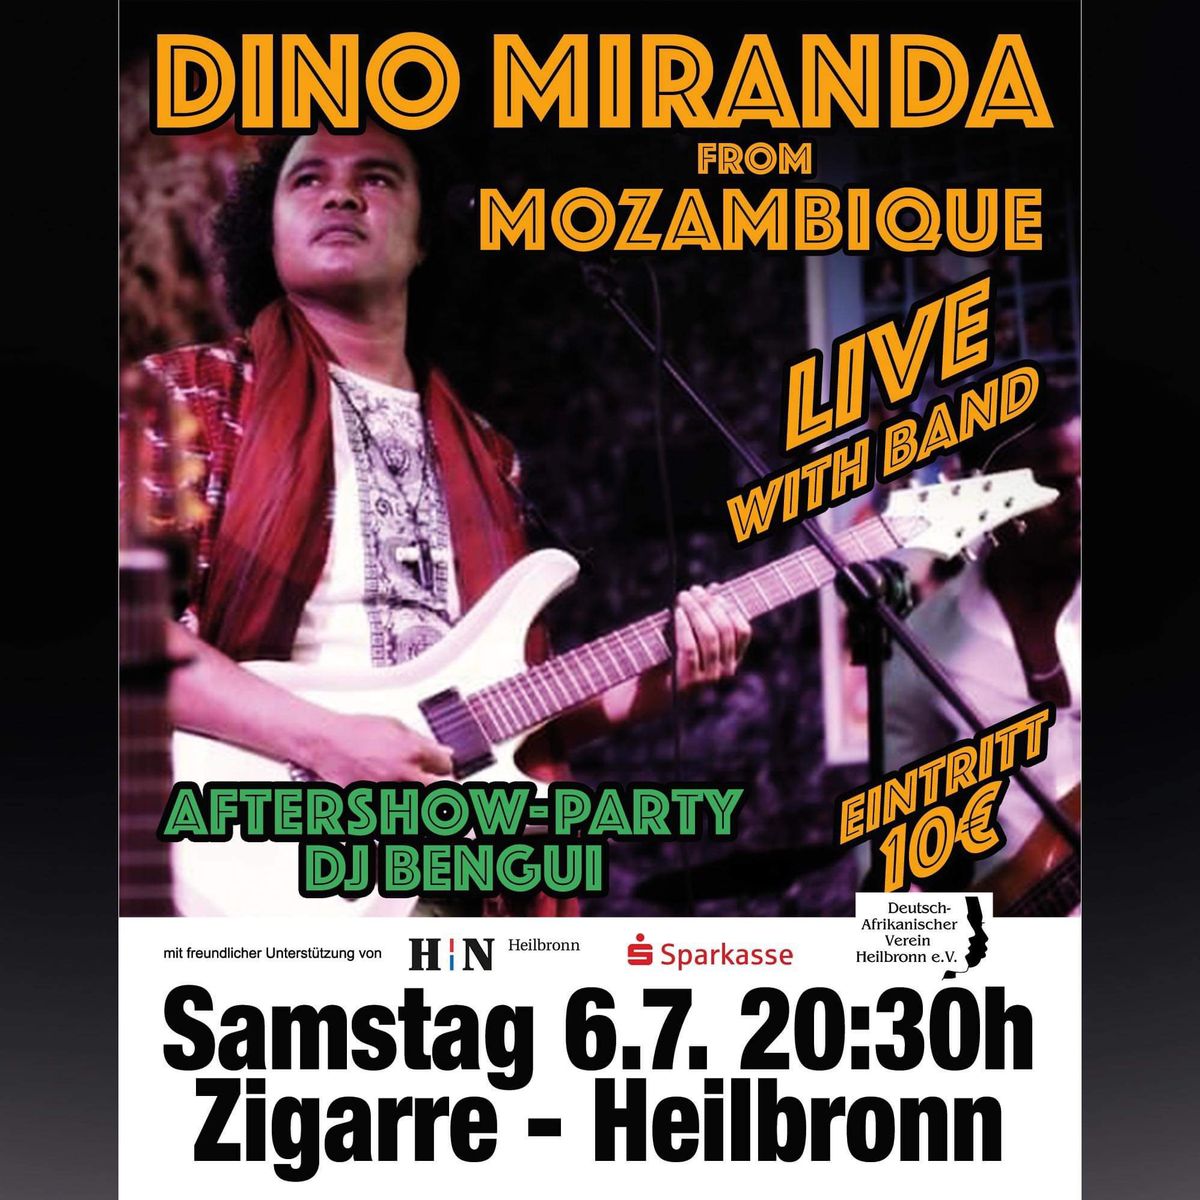 Dino Miranda Live with Band